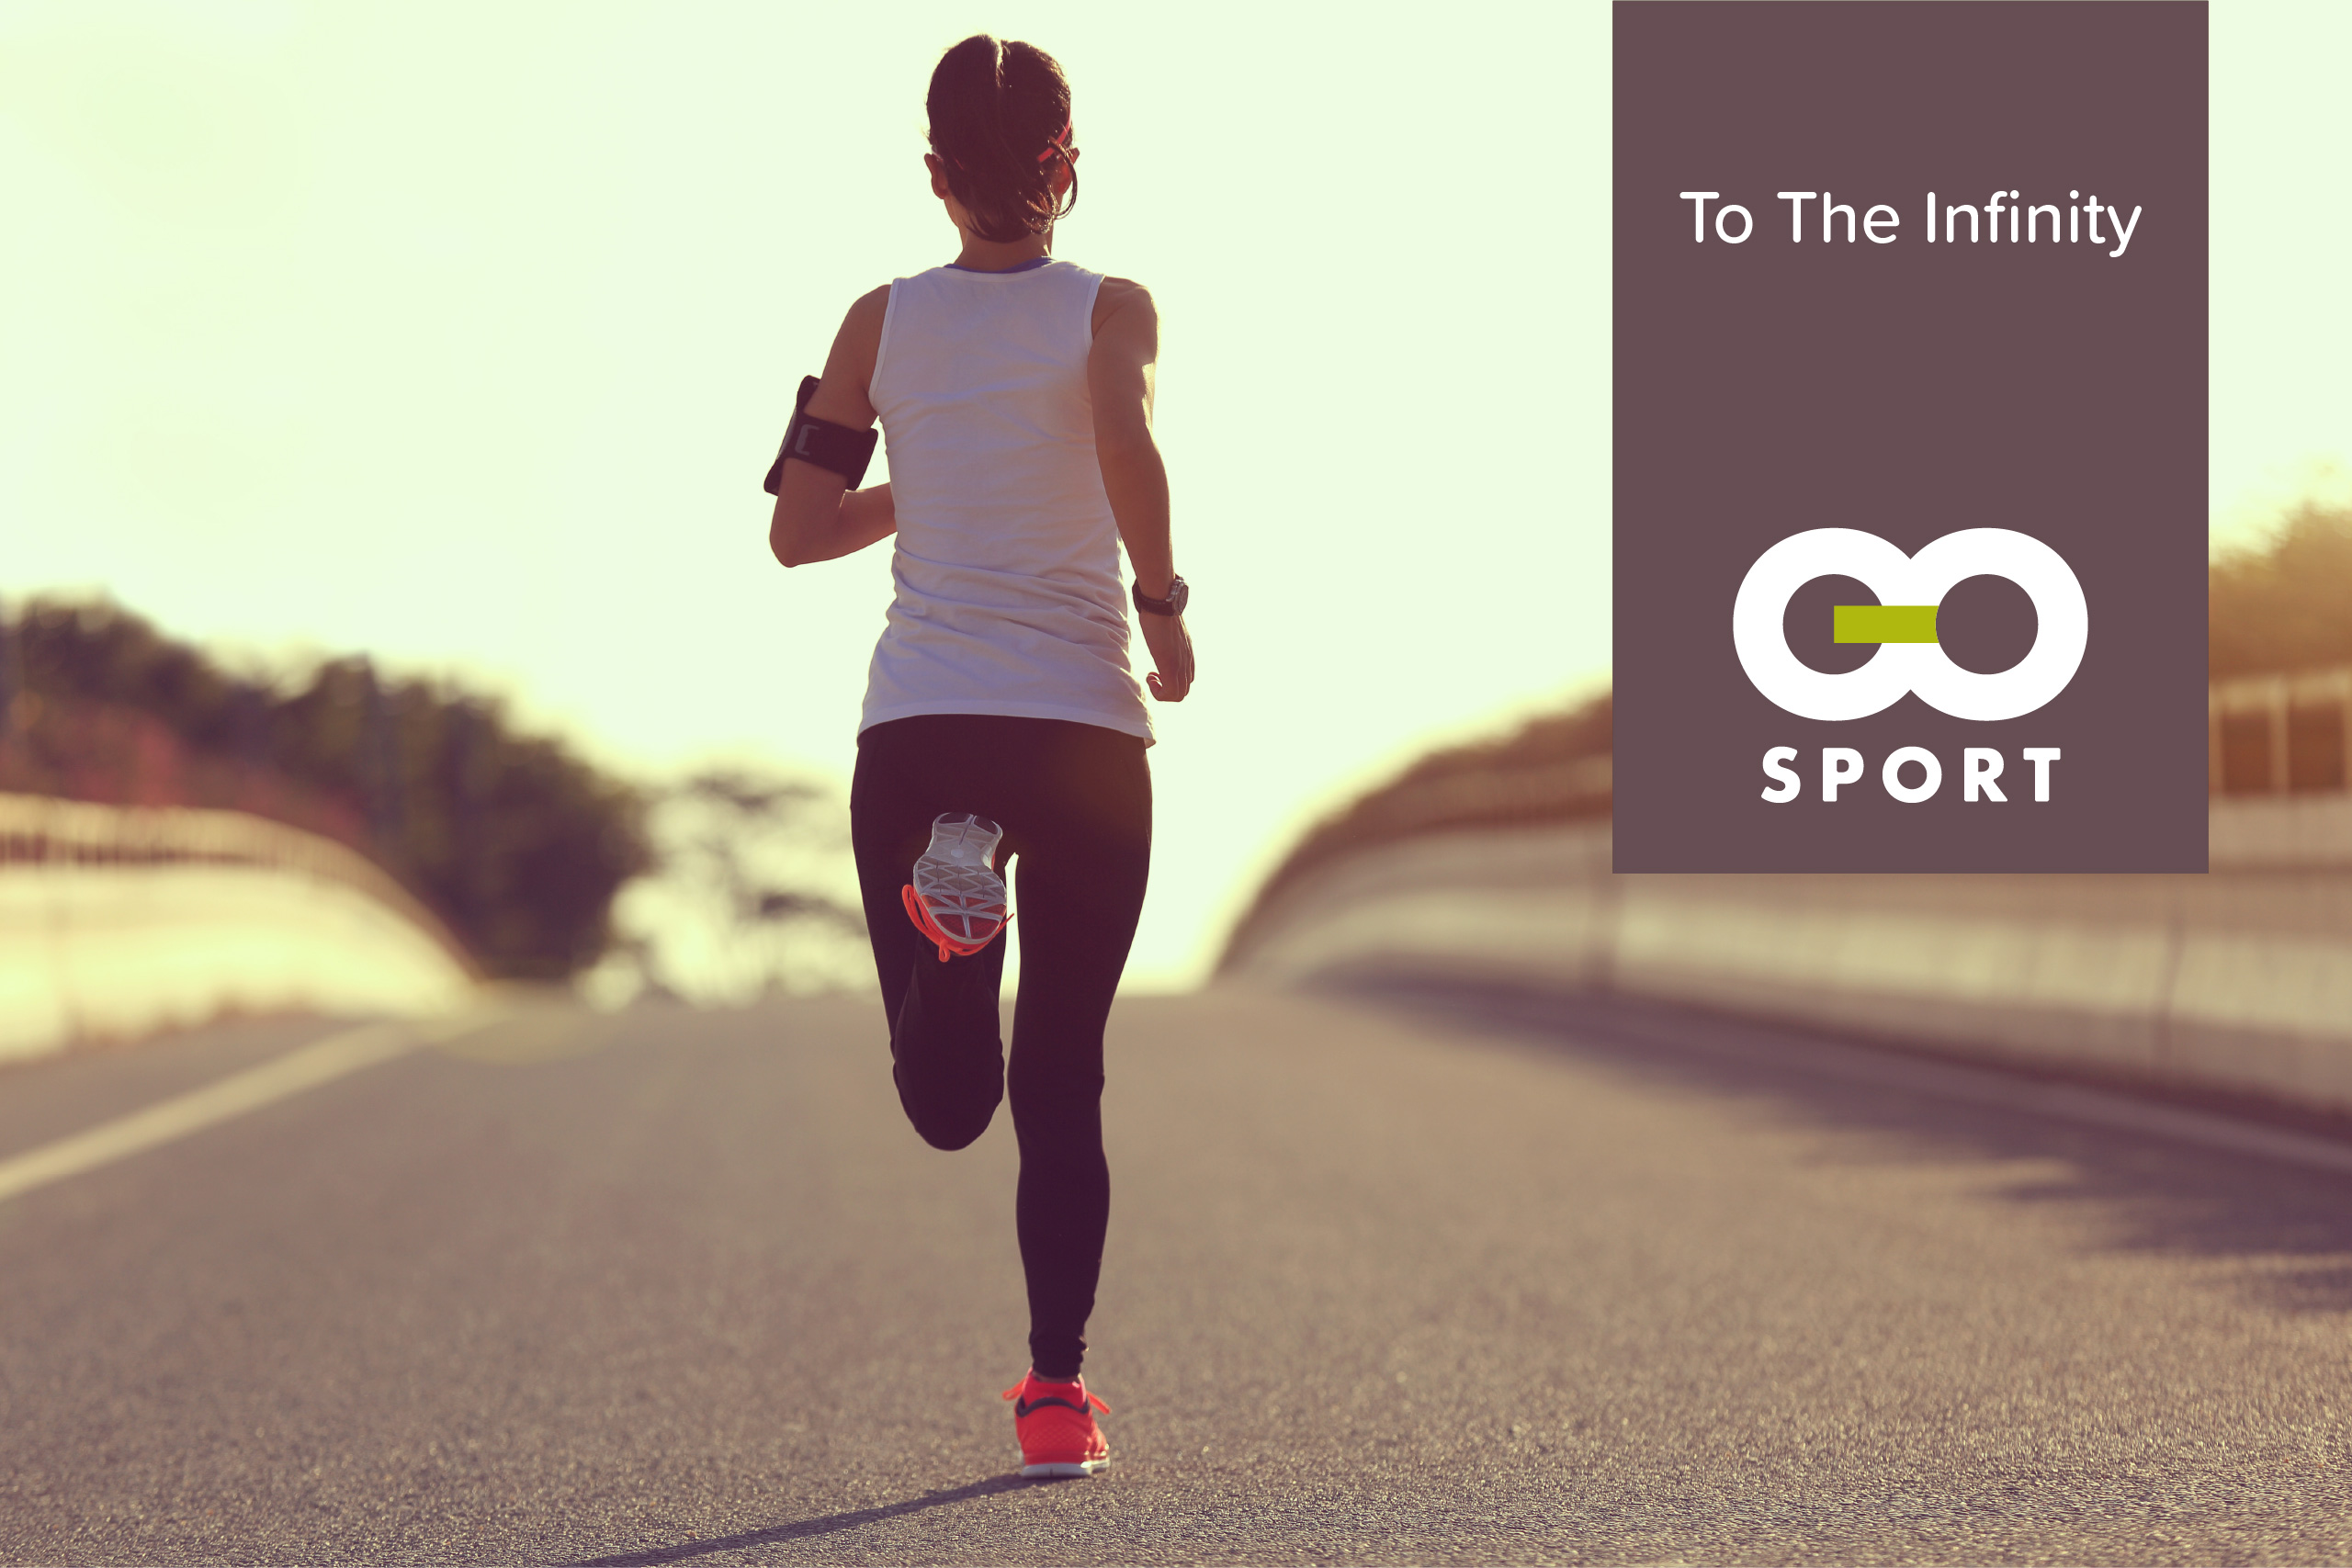 I go in for sports. Go Sport спорт. Go Jogging транскрипция. Go Sport приложение. Go to Sport интернет магазин.